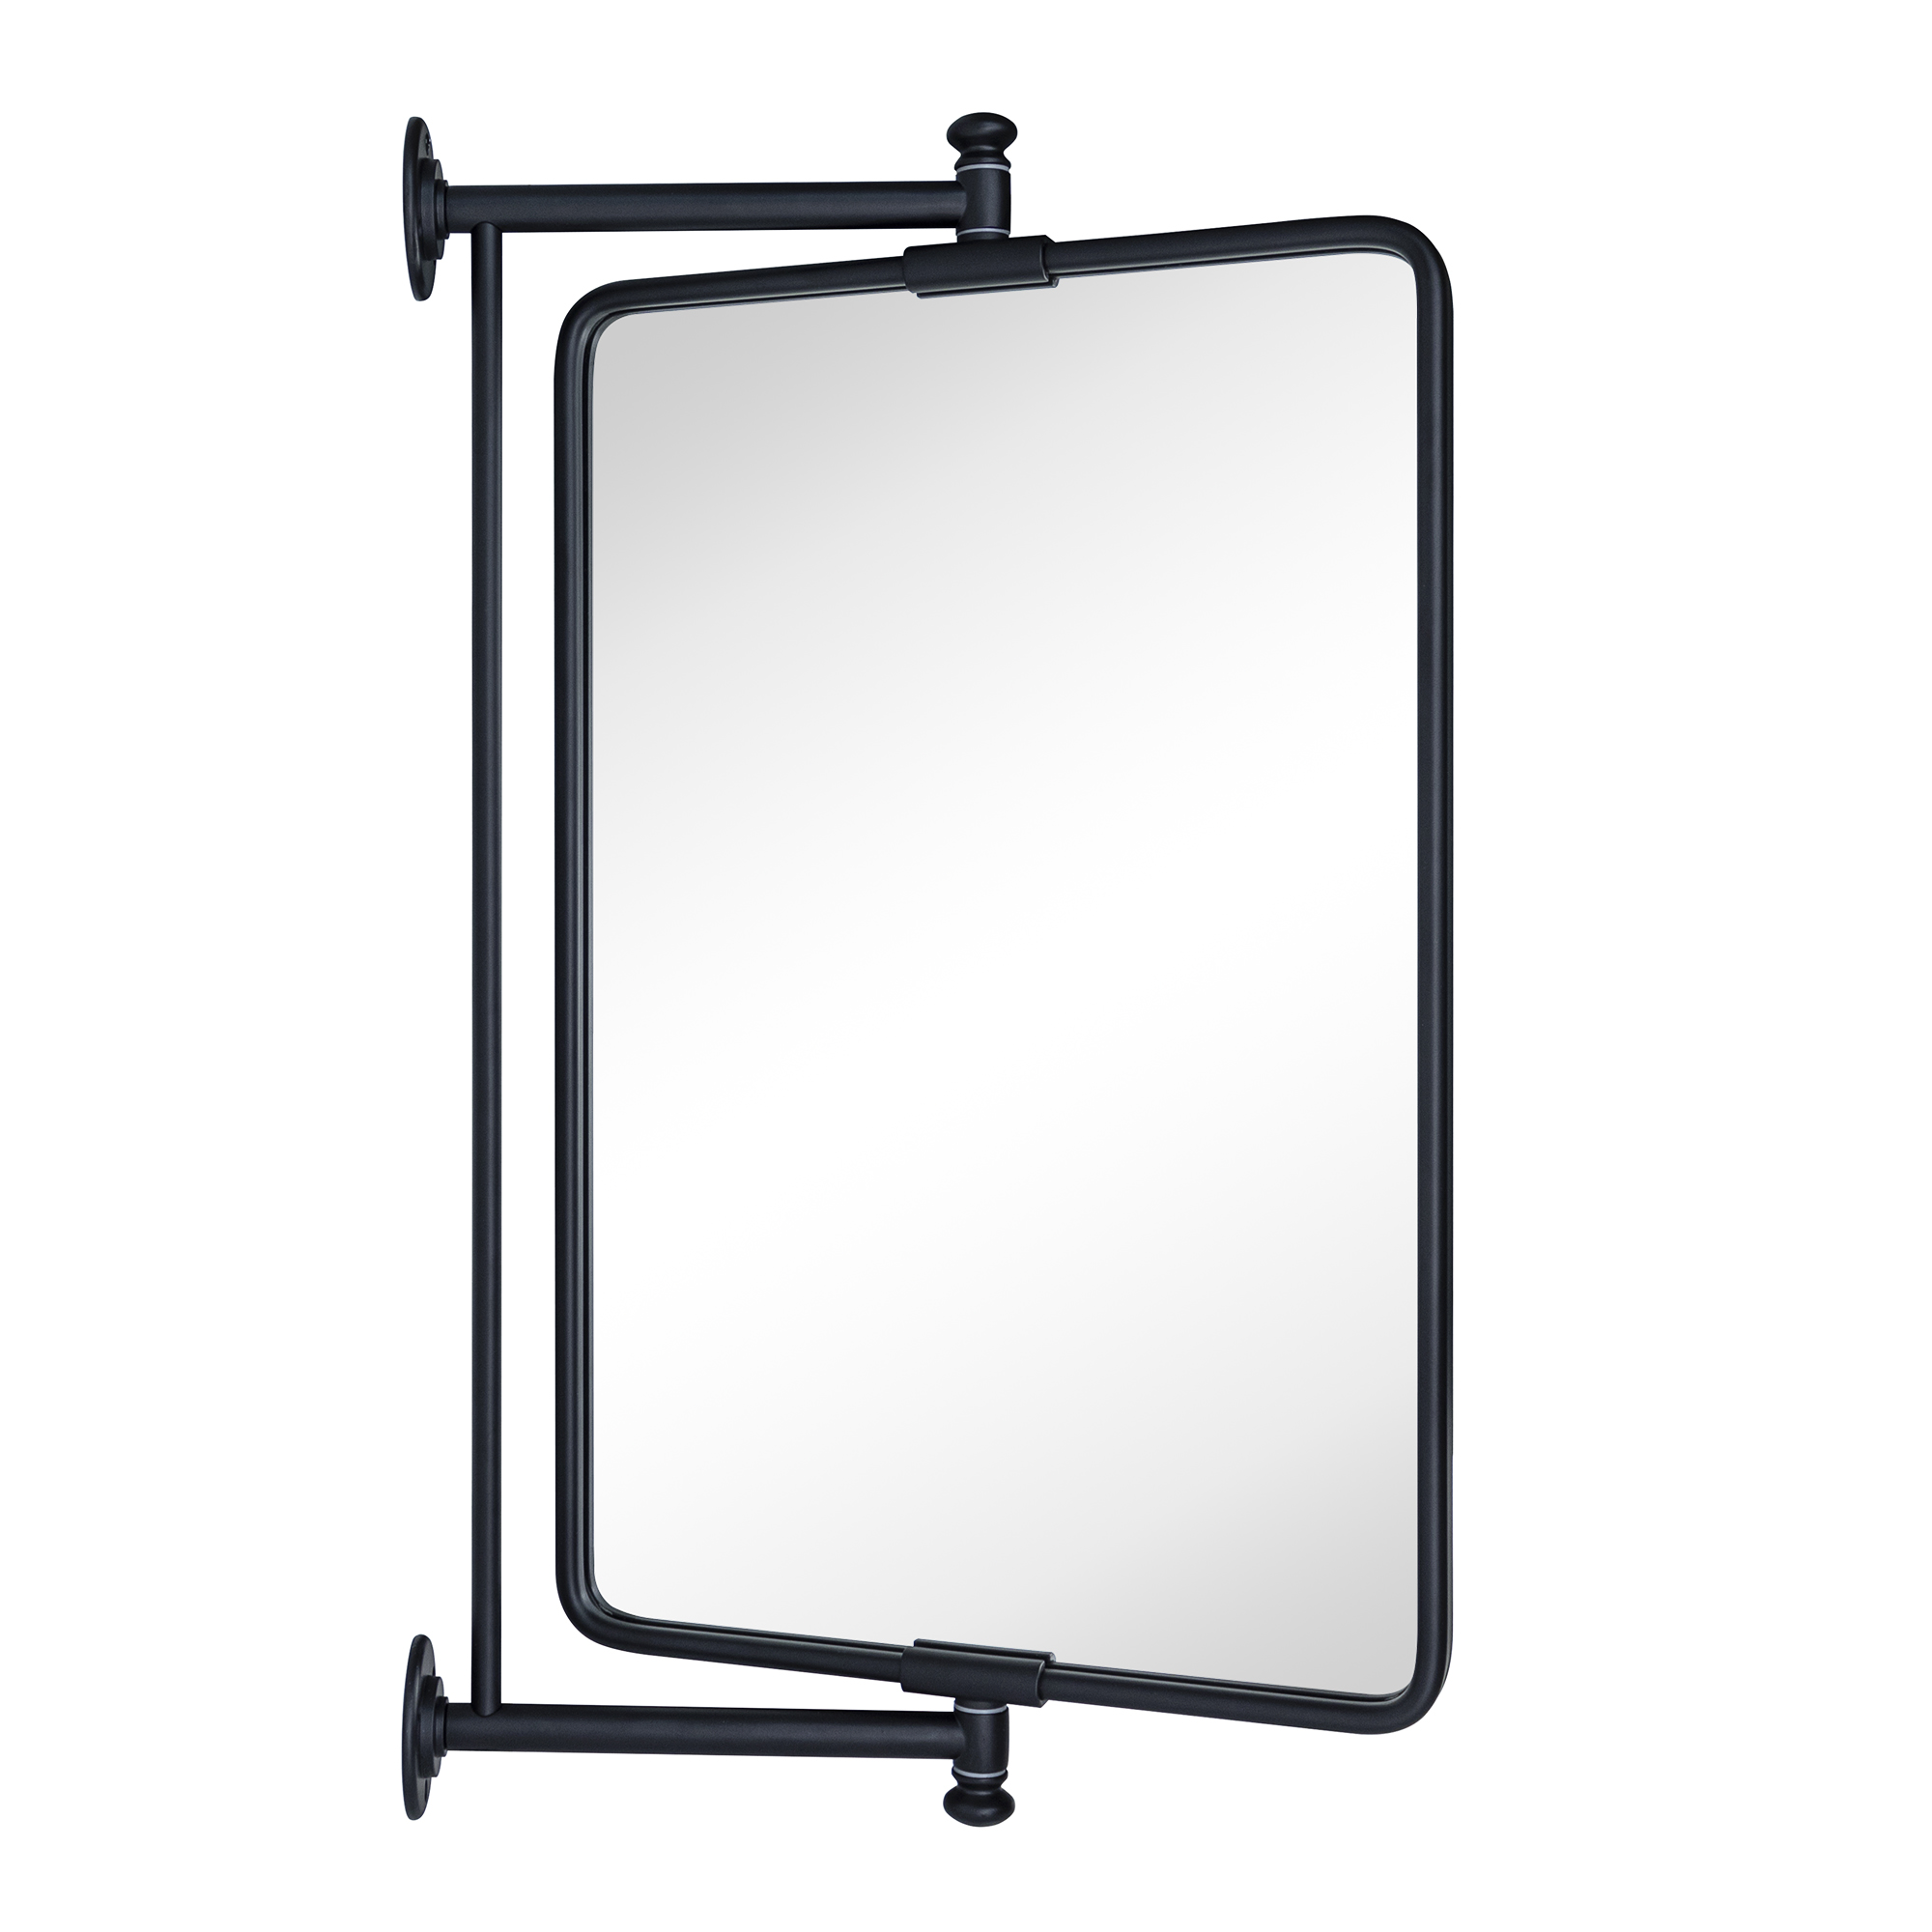 Correon Pivot-N-View Rectangle Mirror for Window Bathroom Vanity-Black